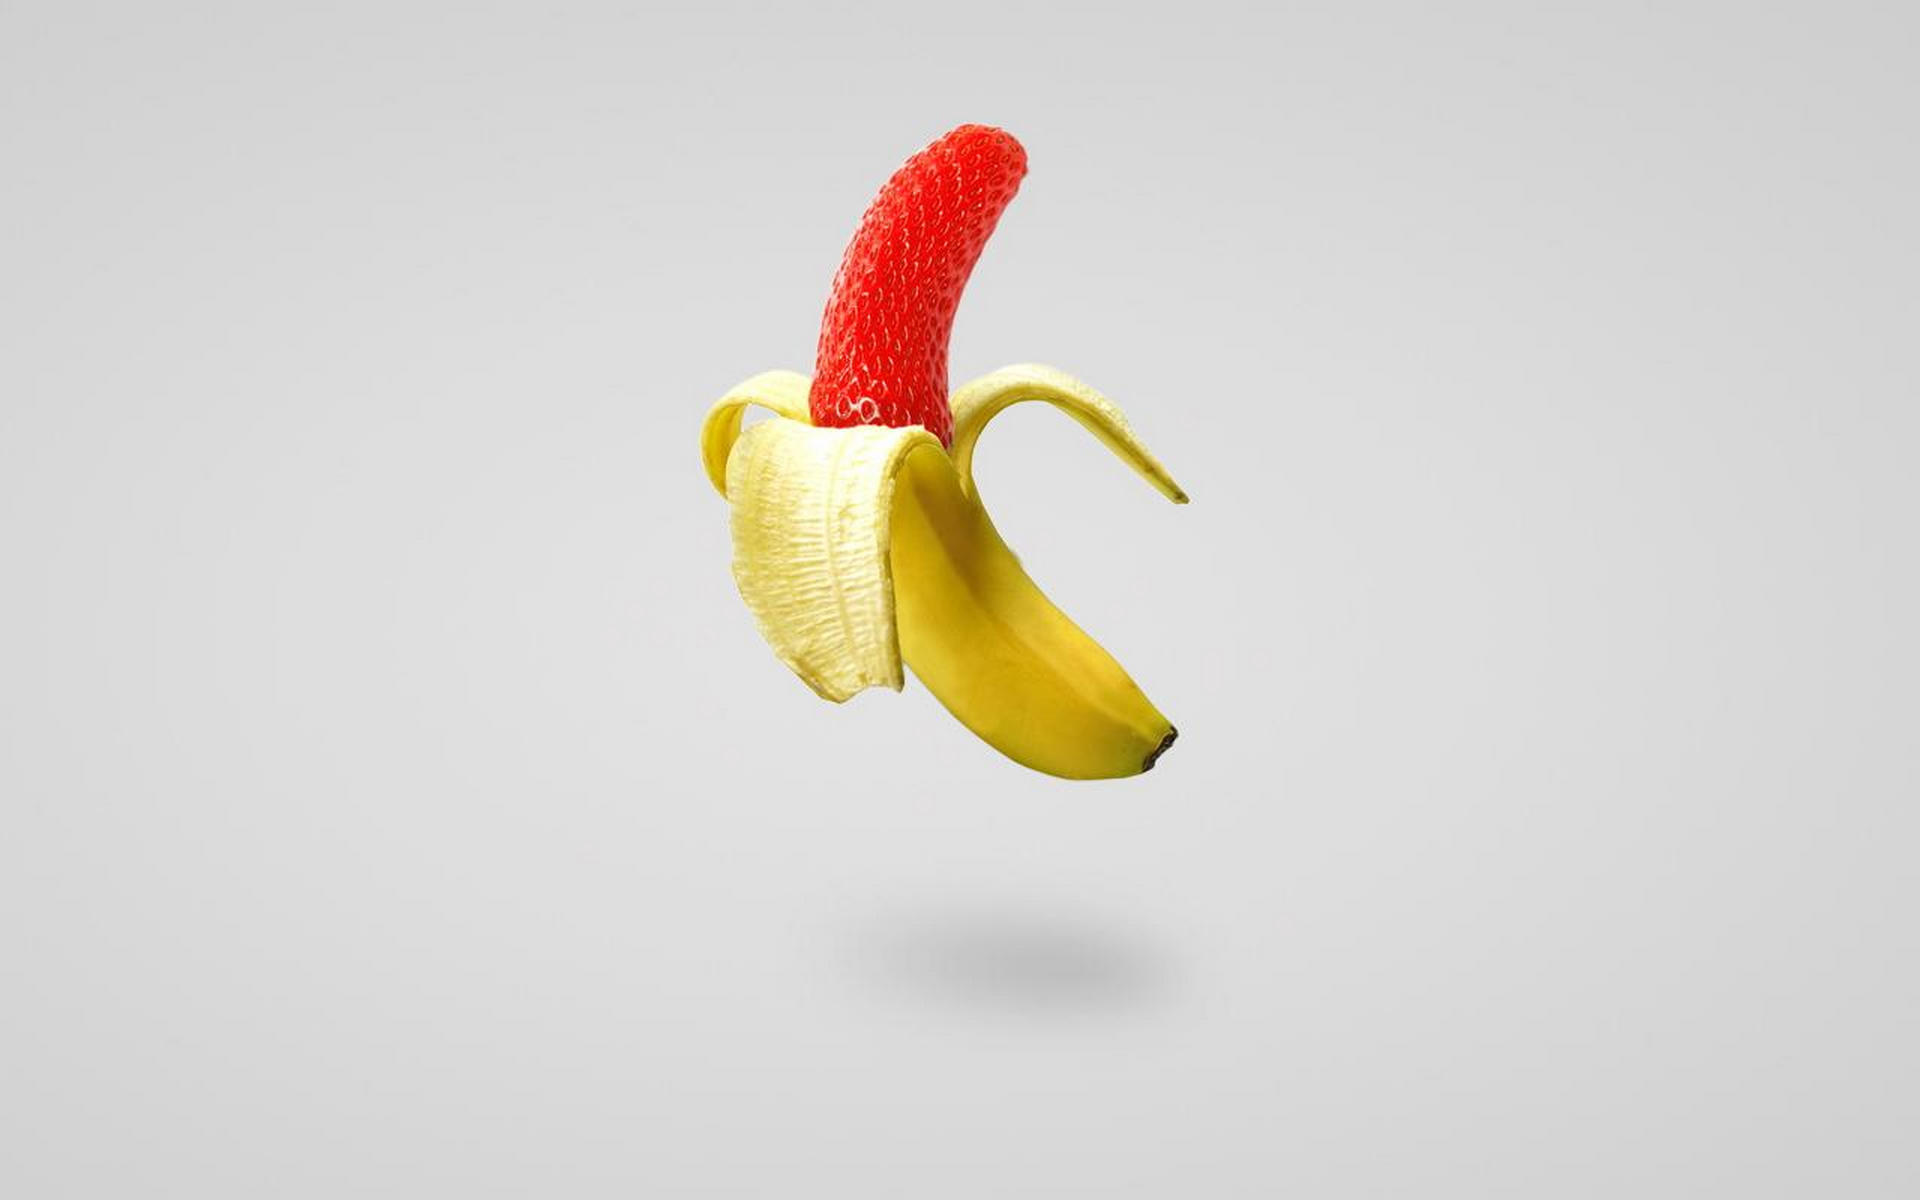 hulled Banana and Strawberries, download photo, wallpapers for desktop, banana wallpapers